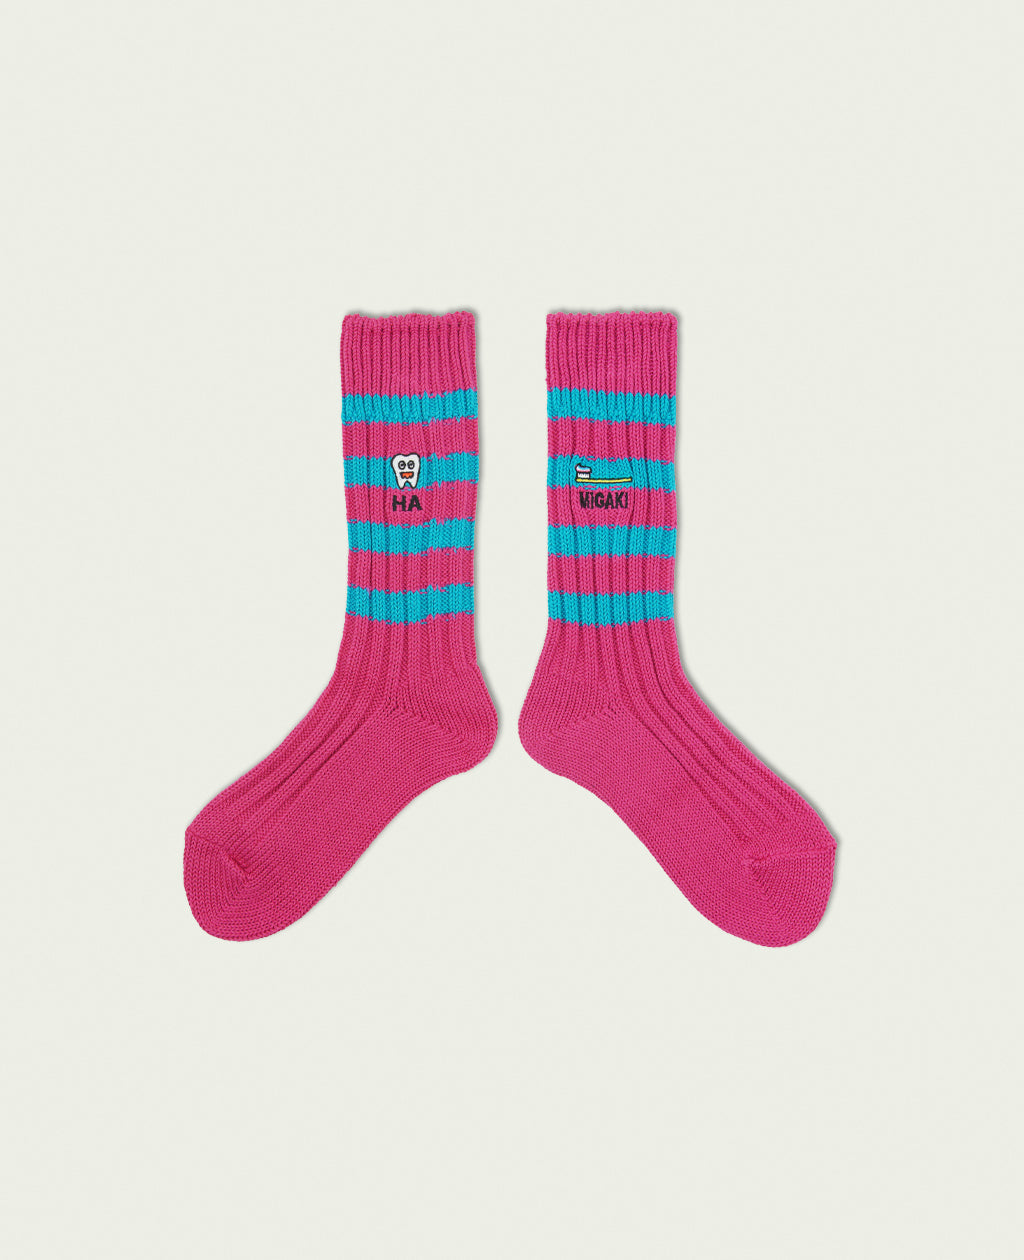 【NEGOSOCKS】 Heavyweight Socks Stripes | HA-MIGAKI（nego6）